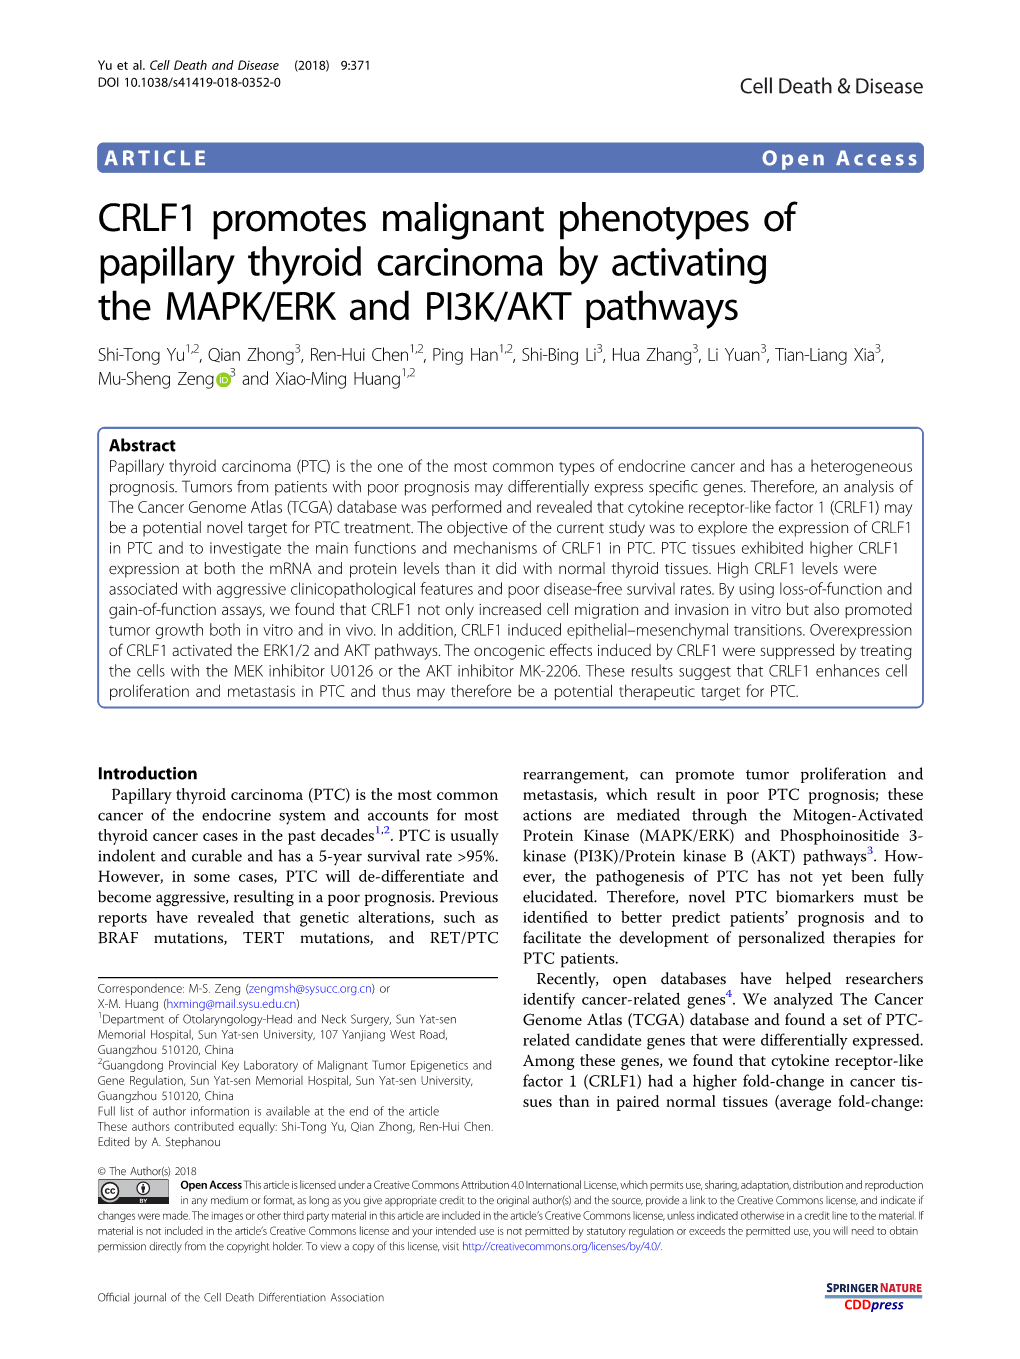 CRLF1 Promotes Malignant Phenotypes of Papillary Thyroid